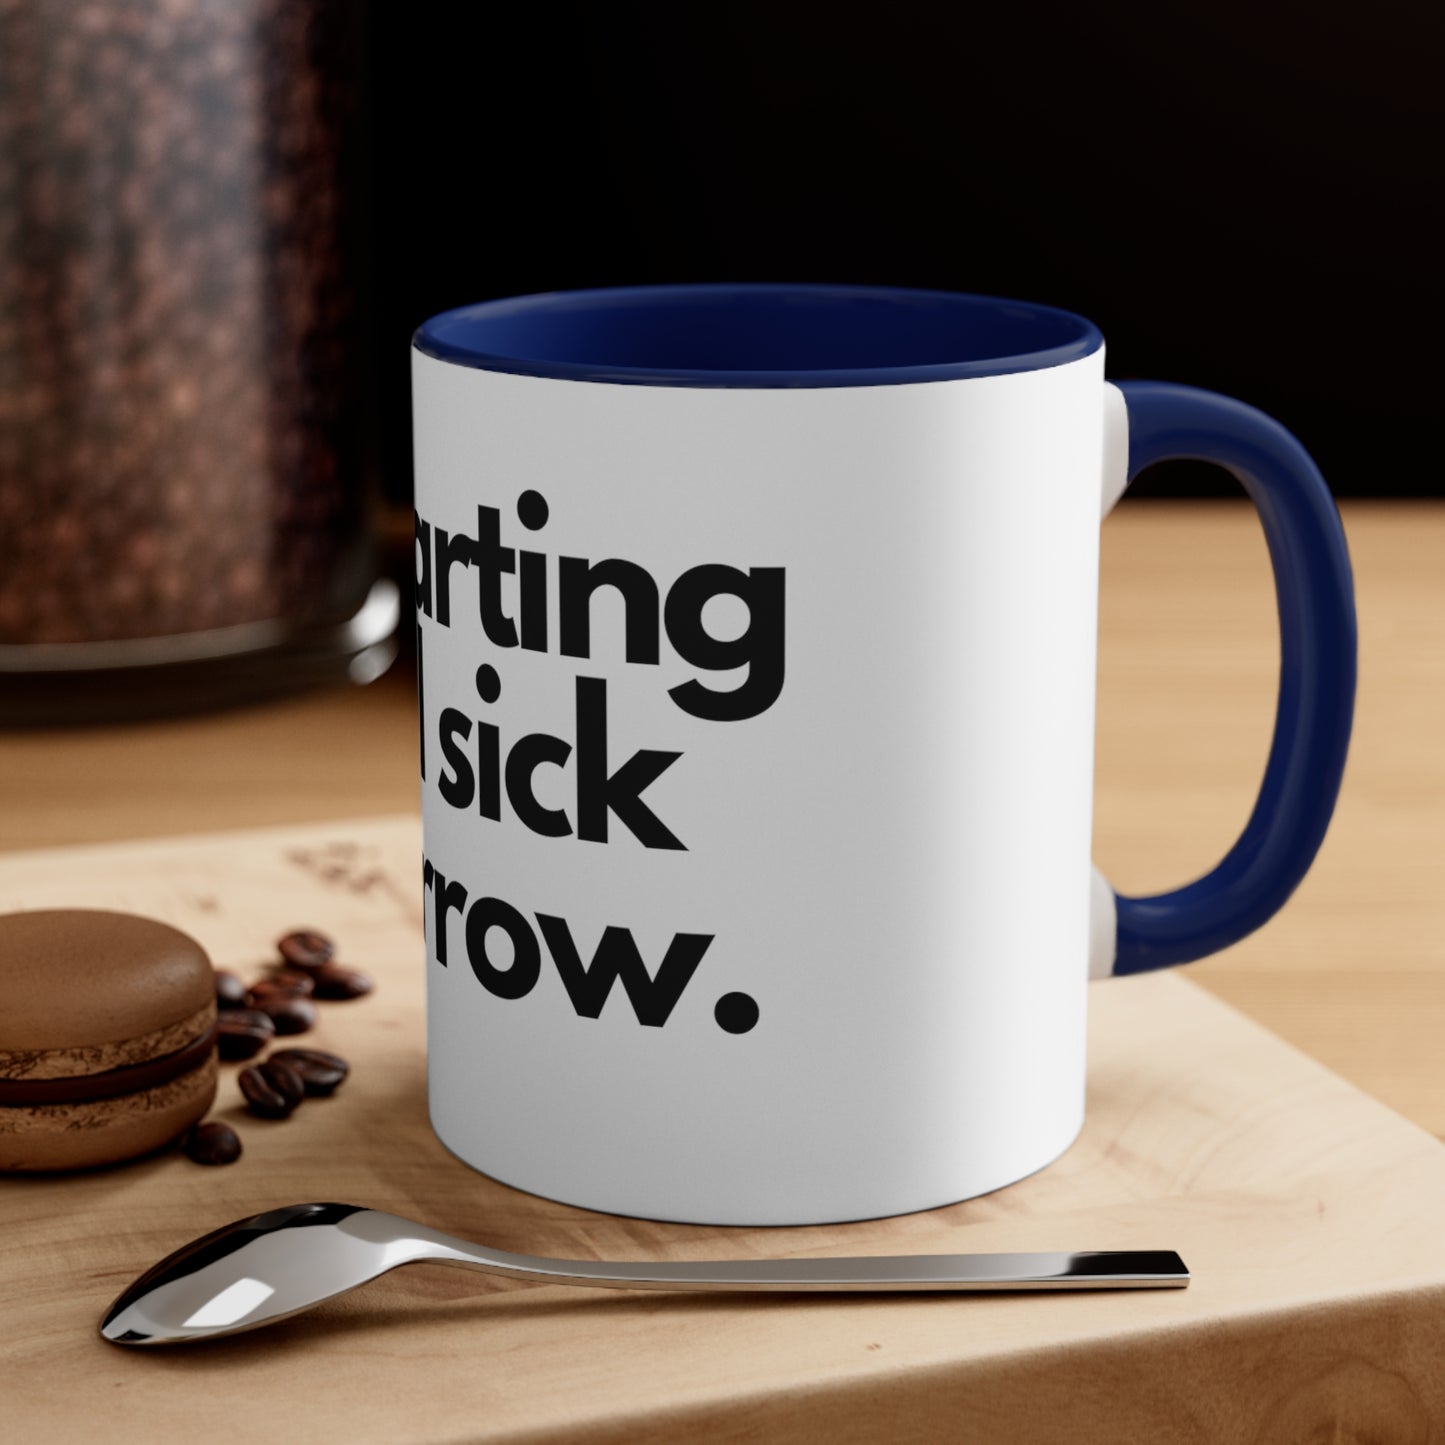 Starting to feel sick - Accent Coffee Mug, 11oz